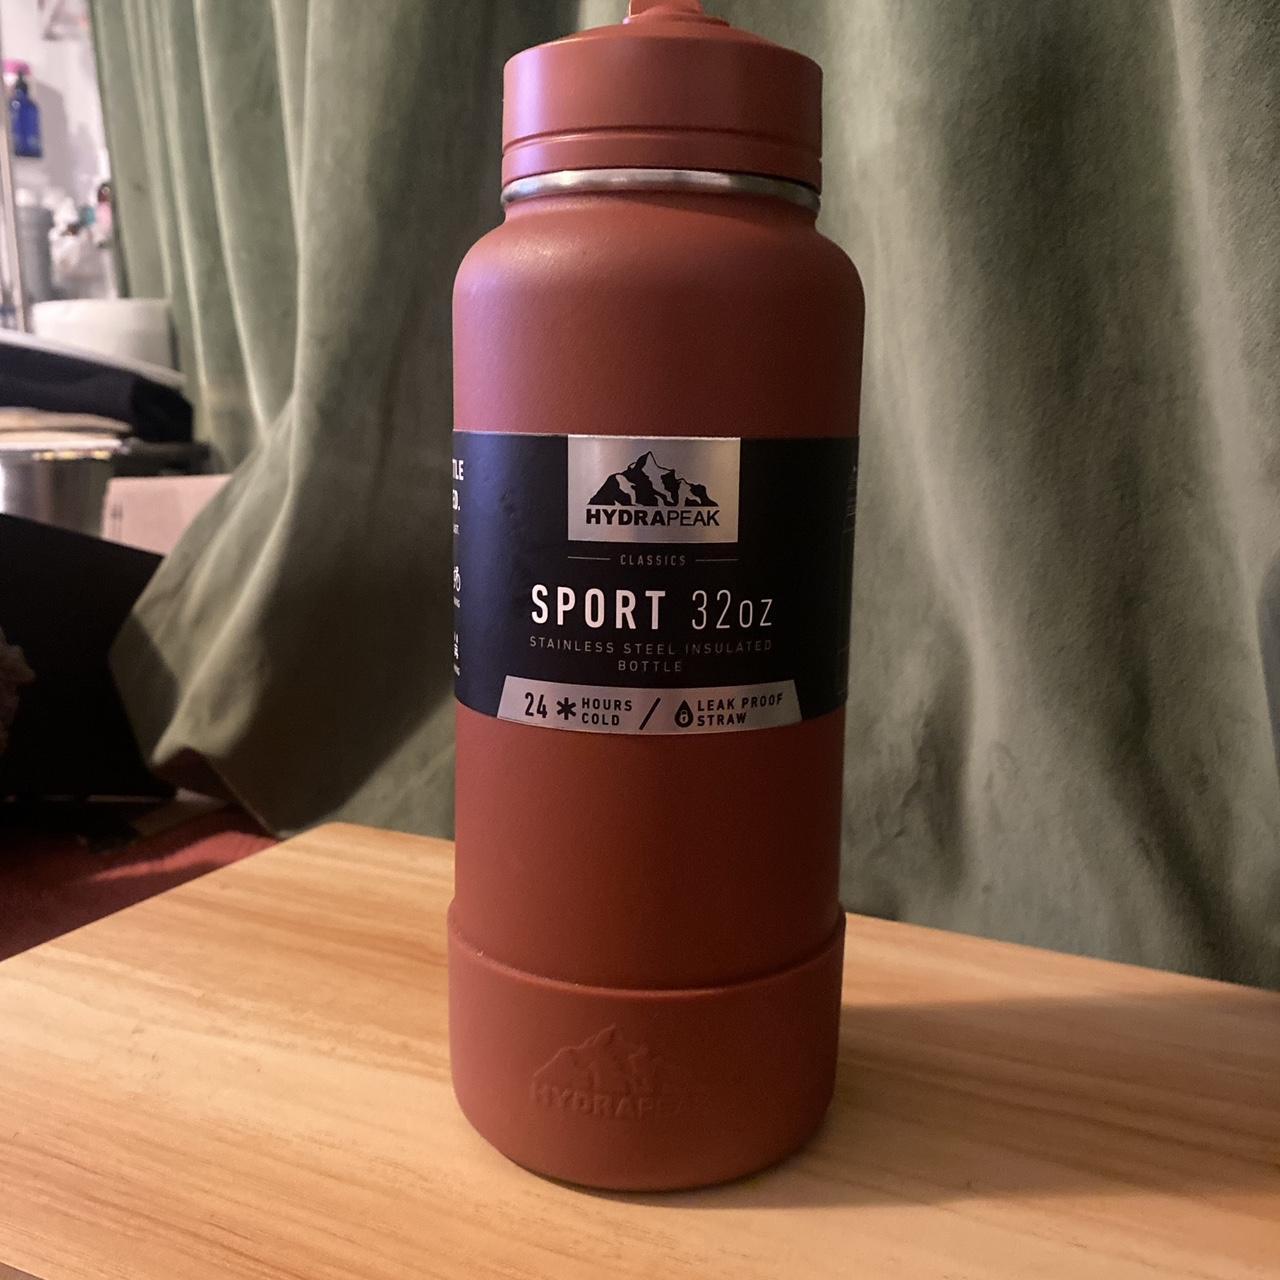 NEW Hydrapeak 32 oz Sports Water Bottle, Stainless Steel Insulated.